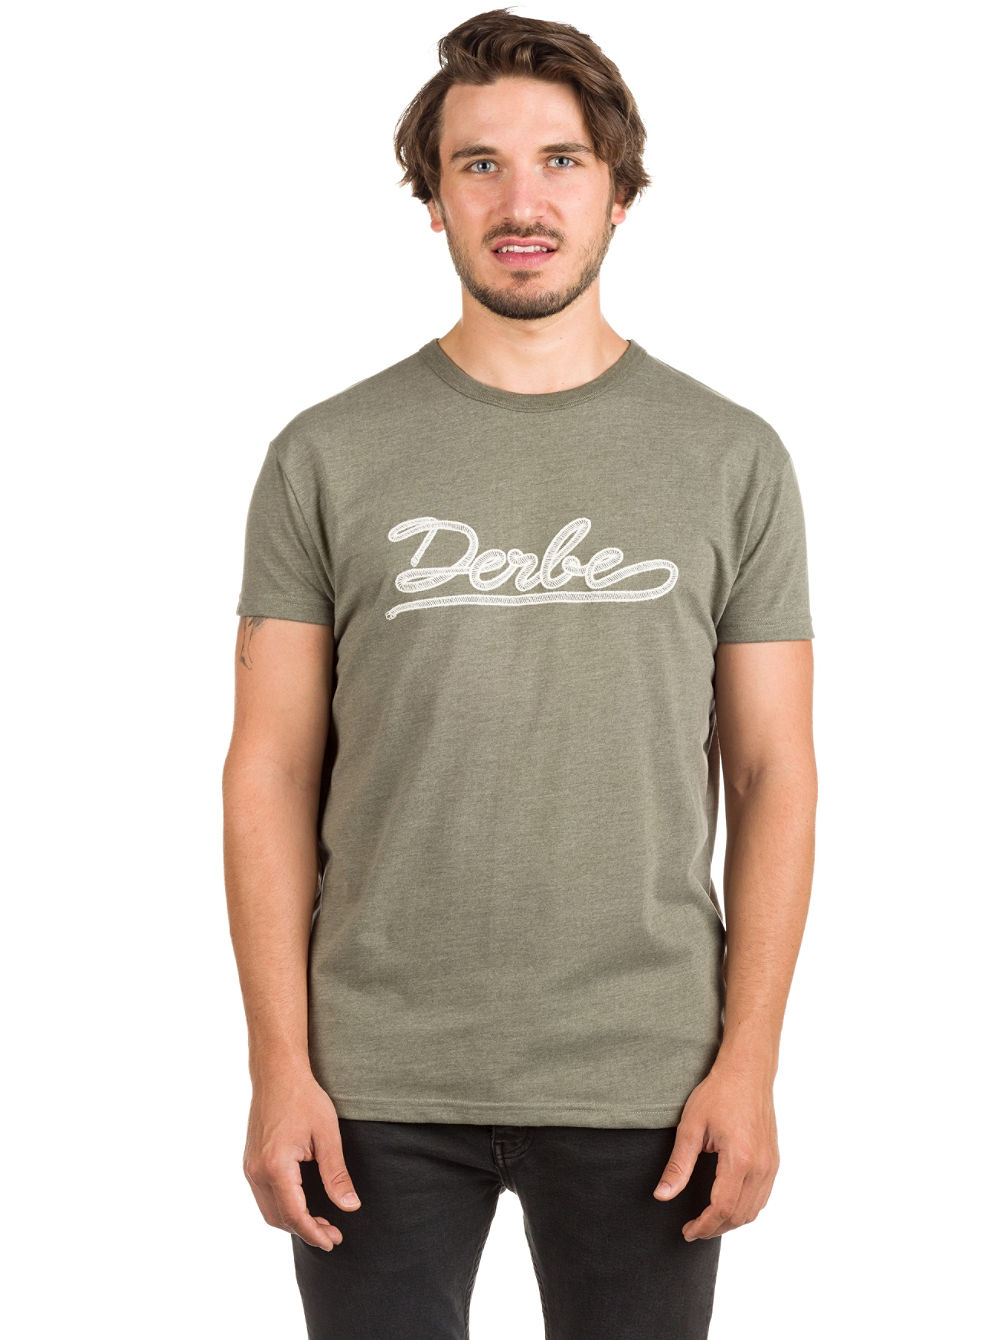 Dock 5 T-Shirt